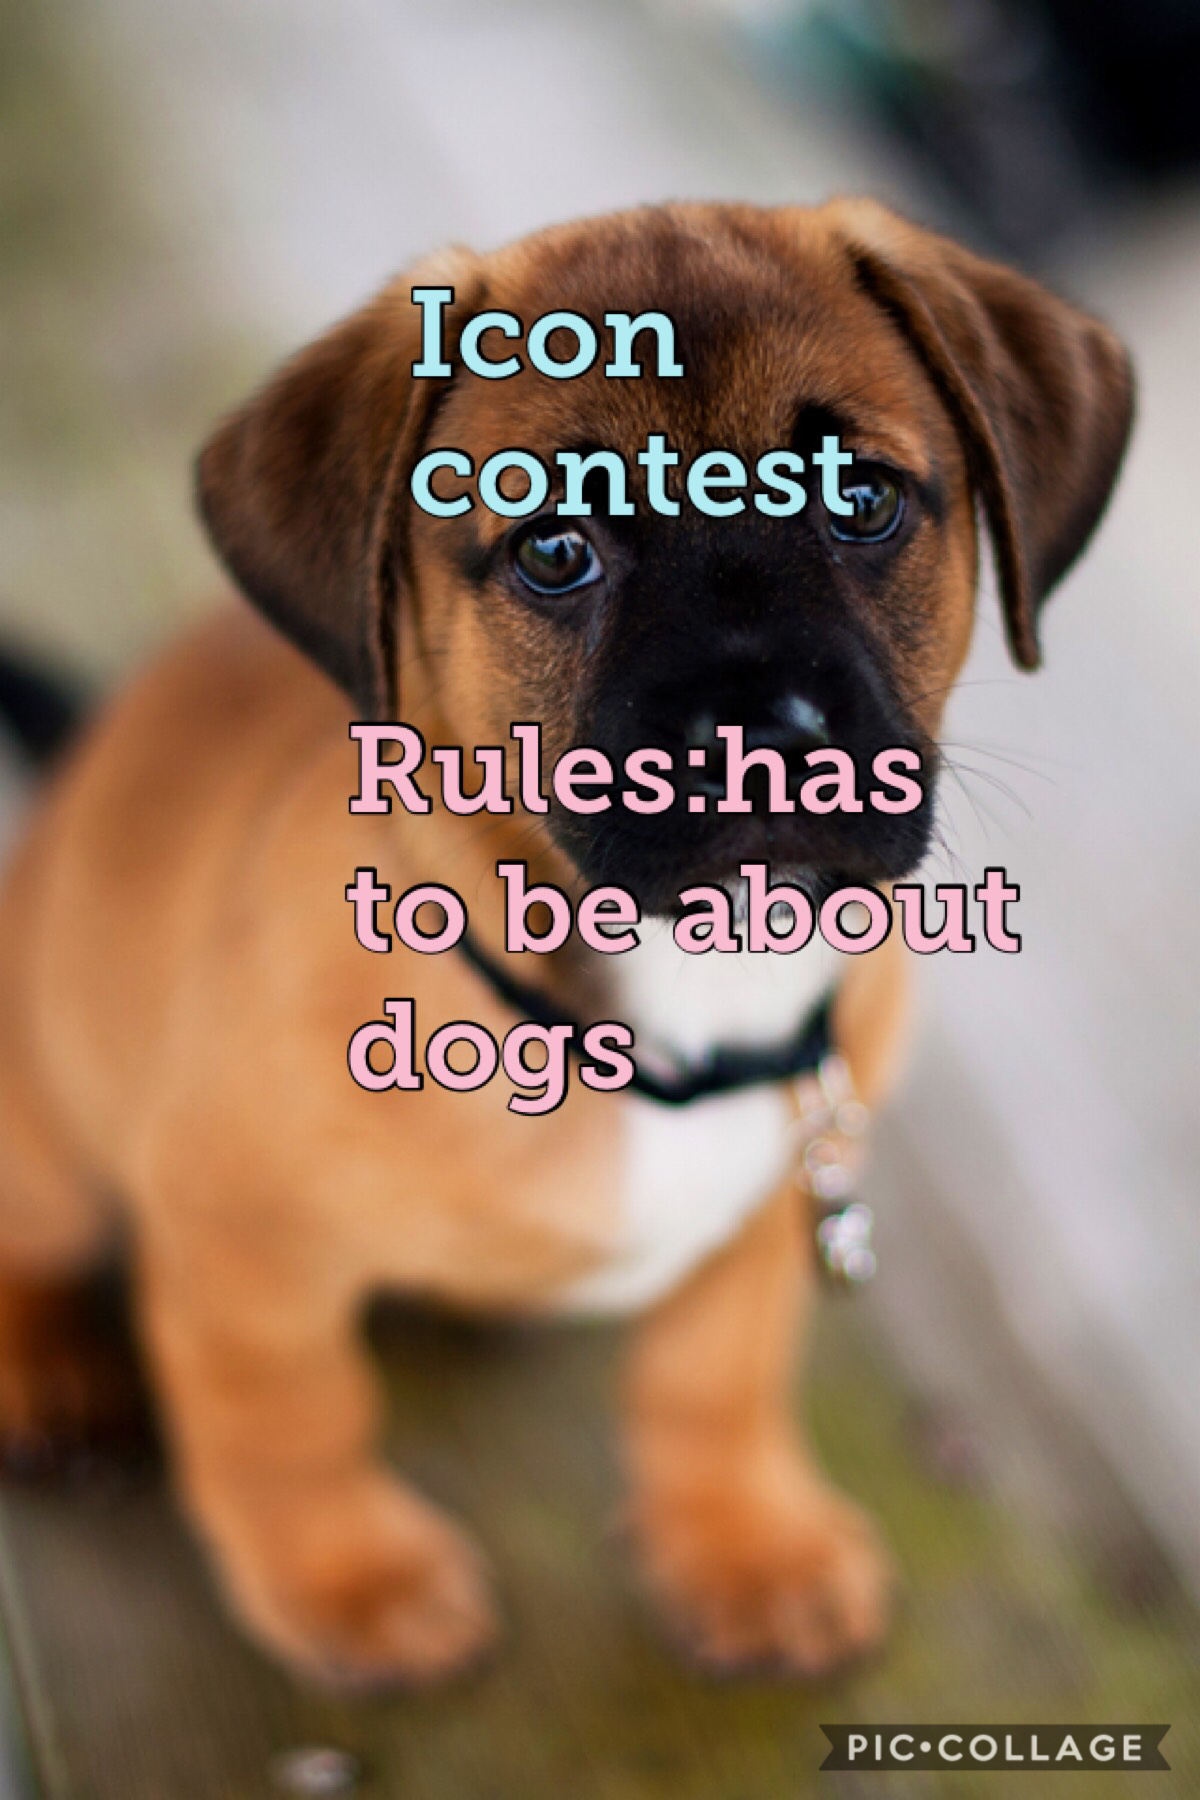 Icon contest!!!!